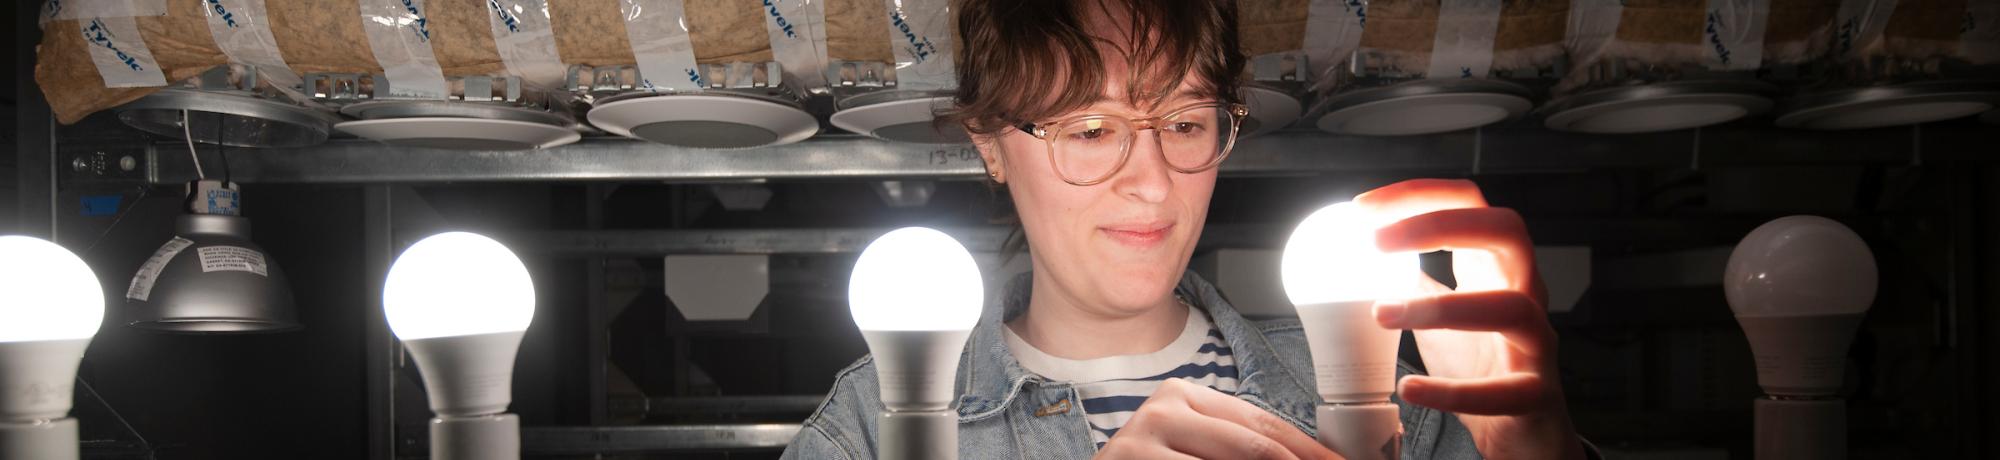 Student installing LED bulbs